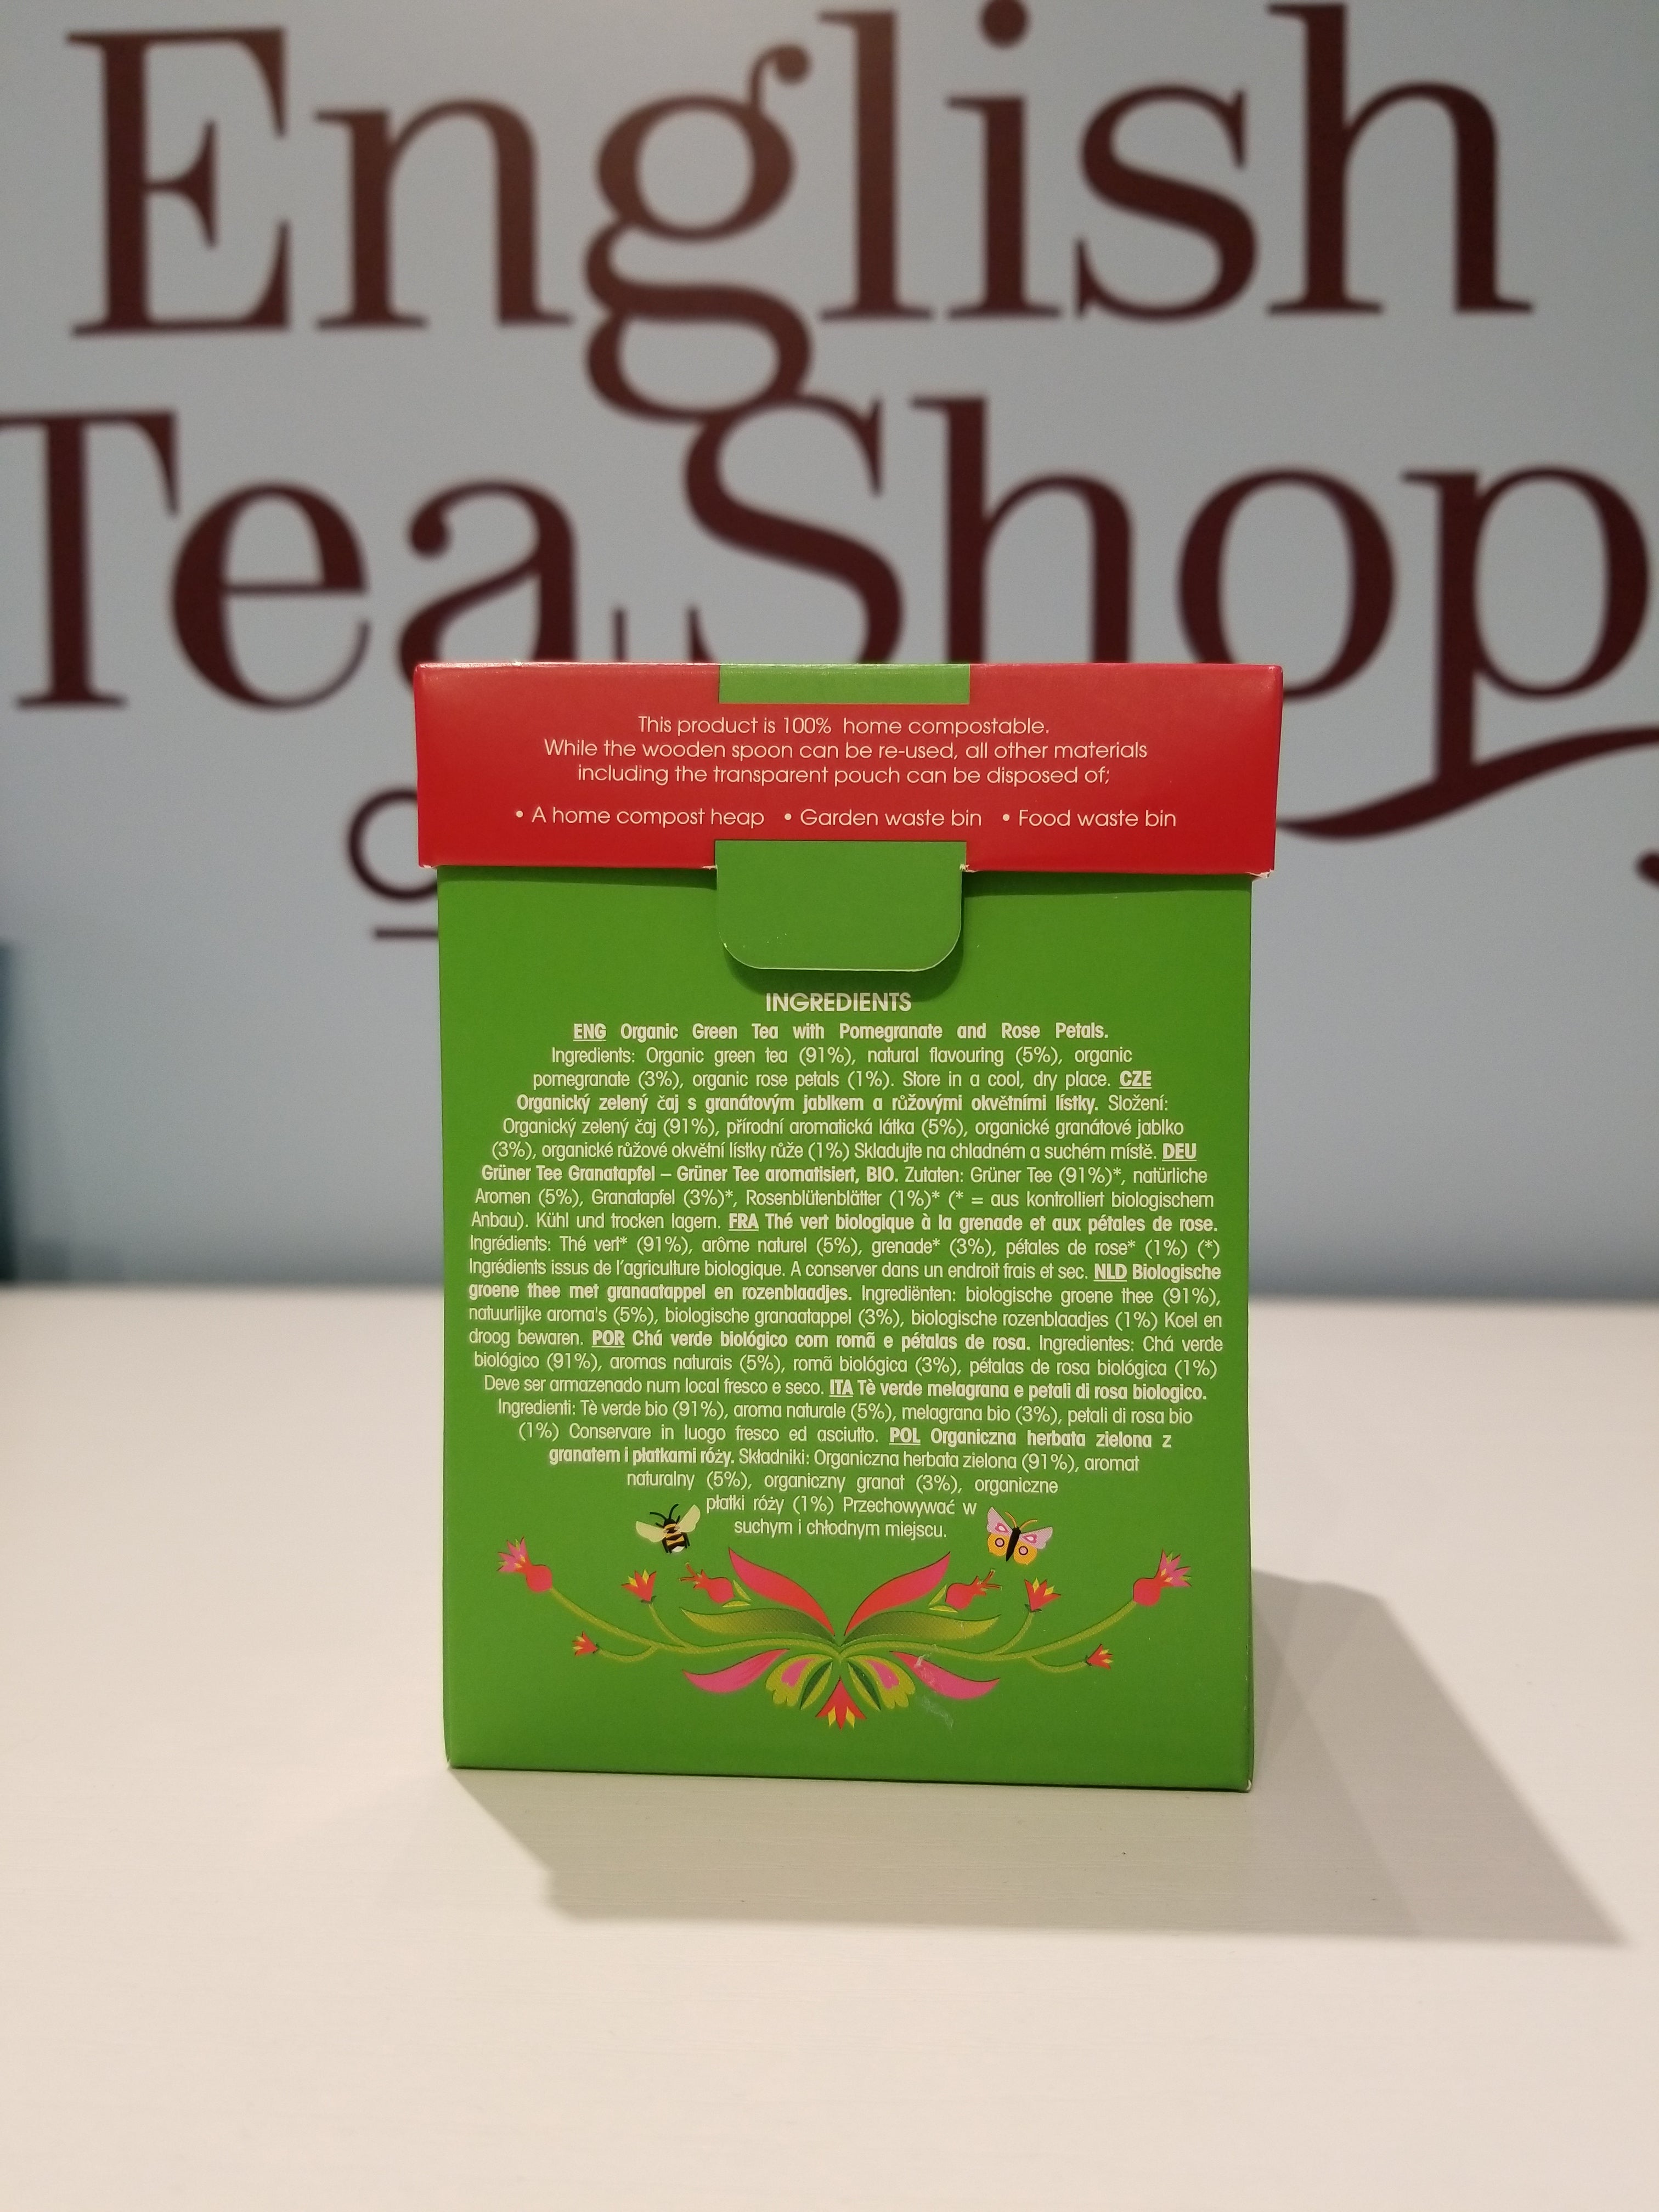 English Tea Shop Organic - Green Tea & Pomegranate (石榴綠茶)